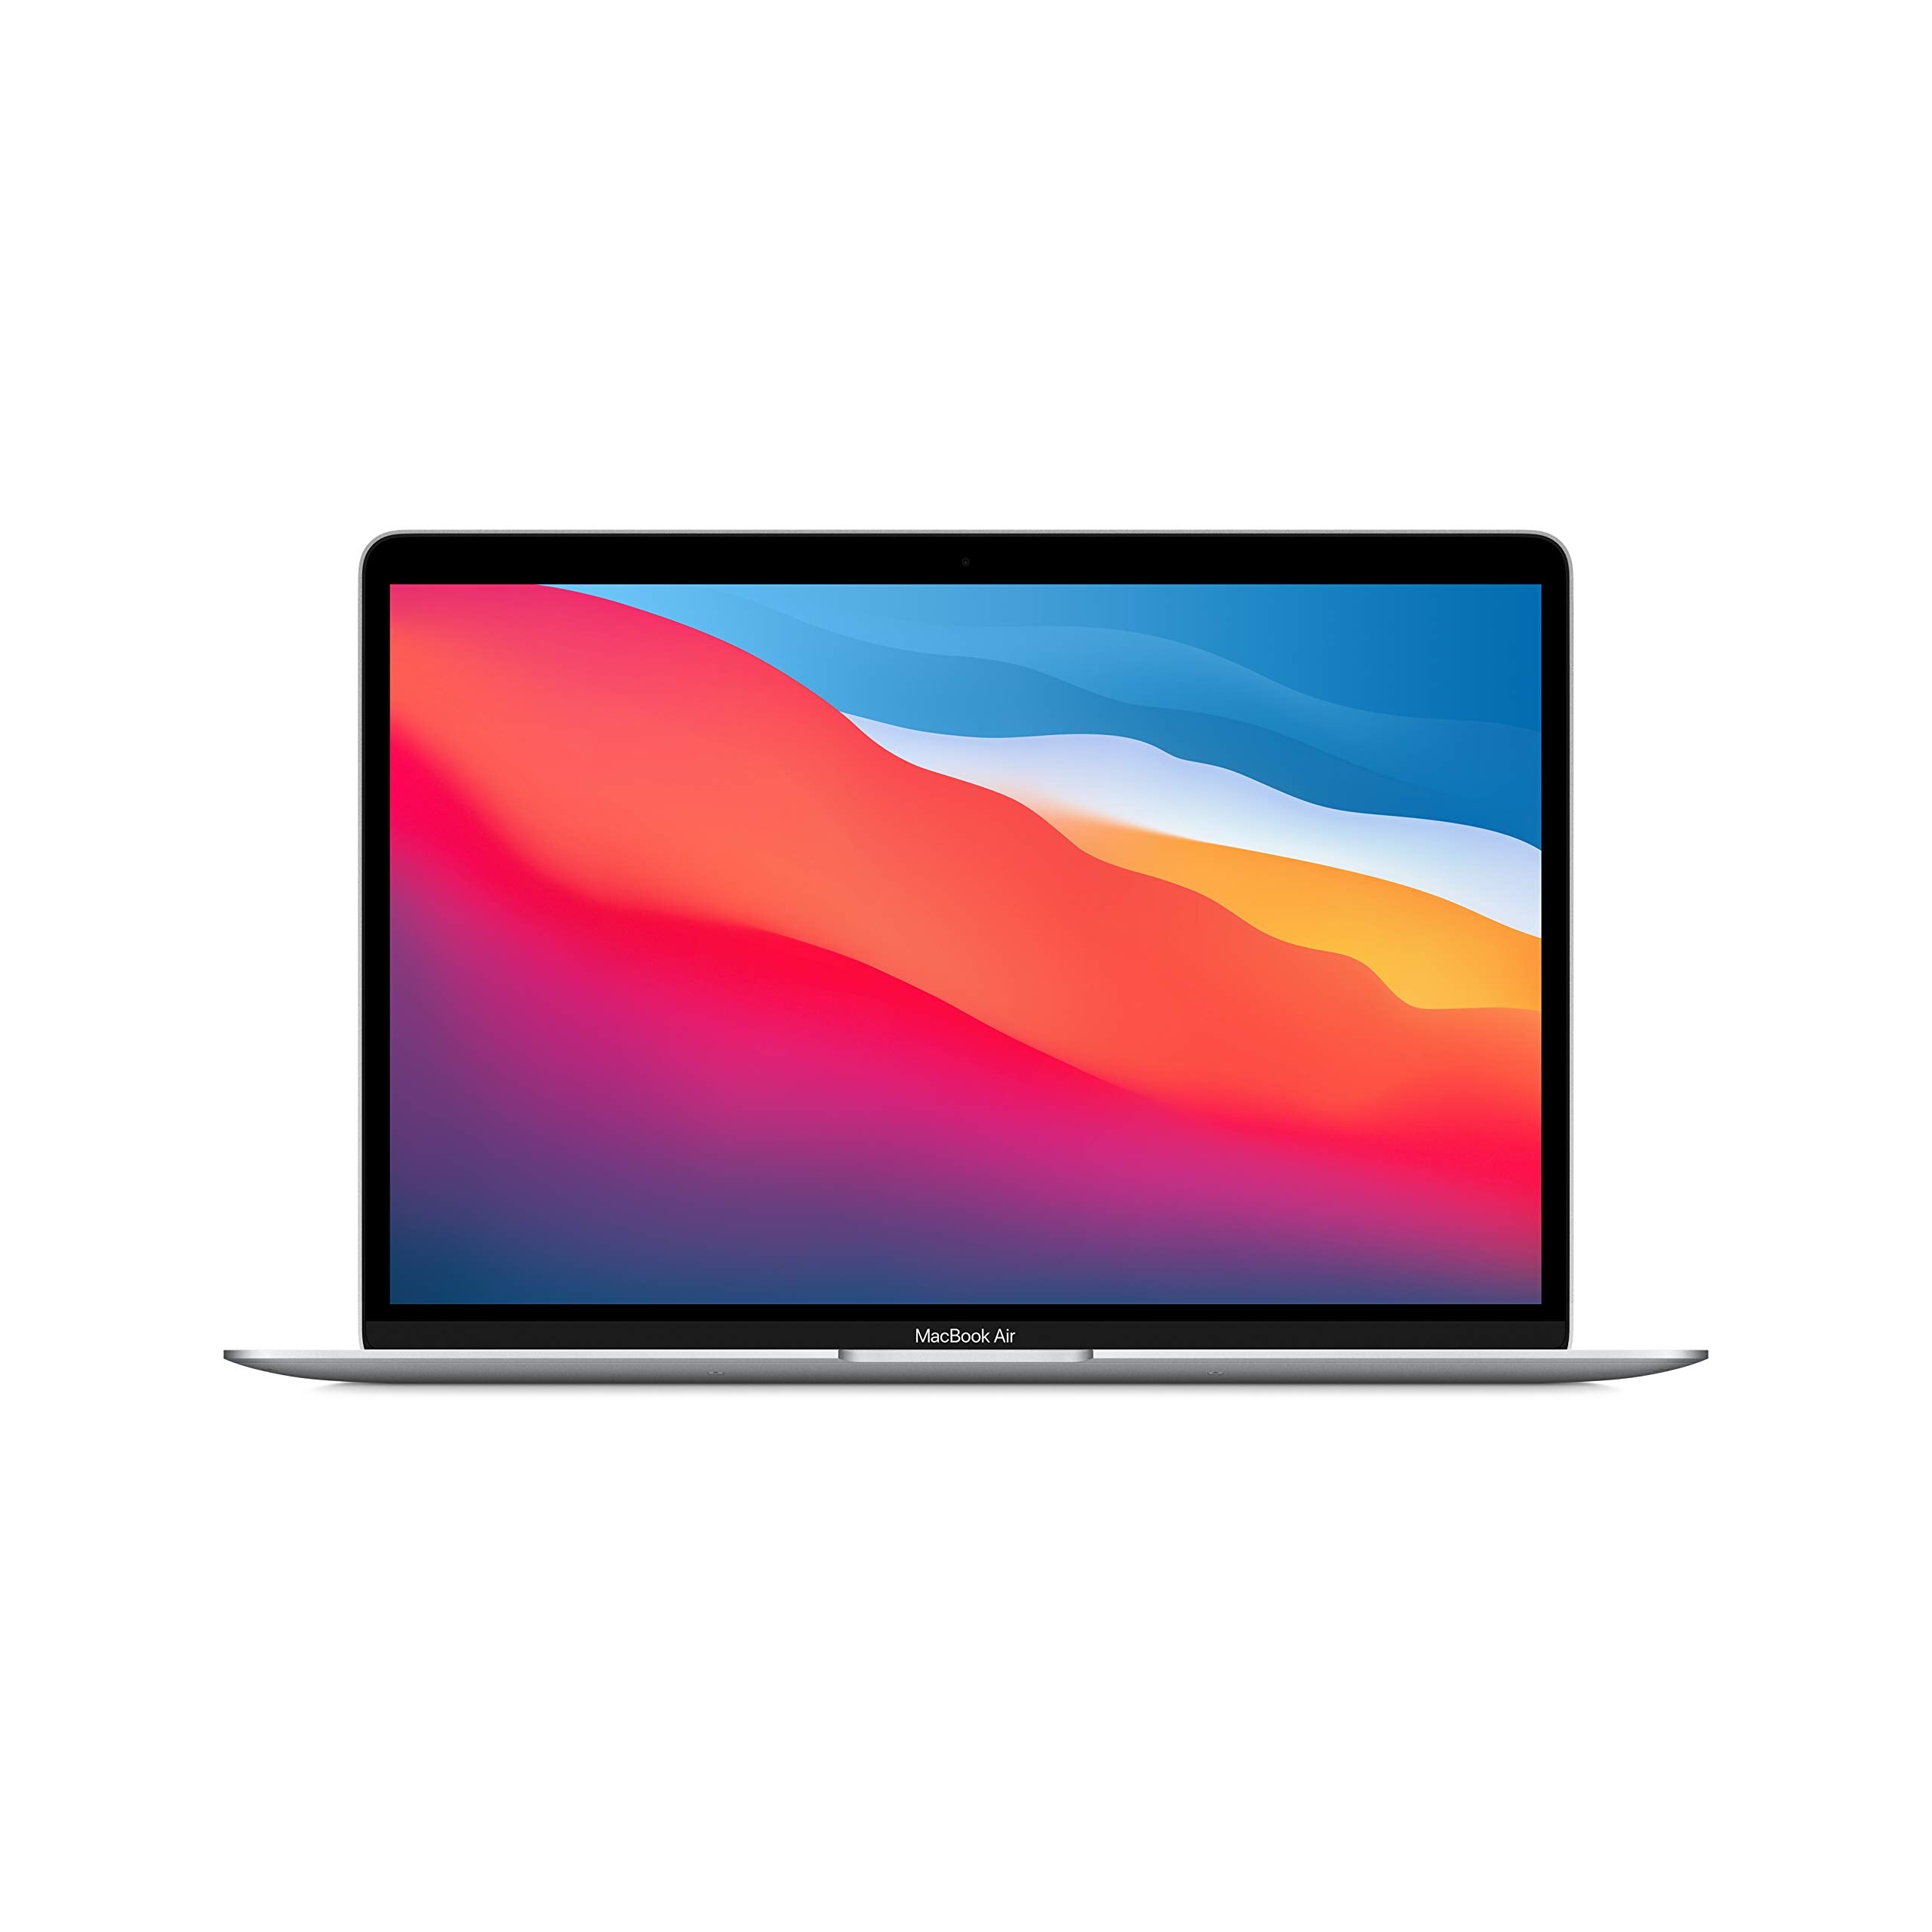 2020 Apple MacBook Air Laptop: Apple M1 Chip, 13” Retina Display, 8GB RAM, 512GB SSD Storage, Backlit Keyboard, FaceTime HD Camera, Touch ID; Silver